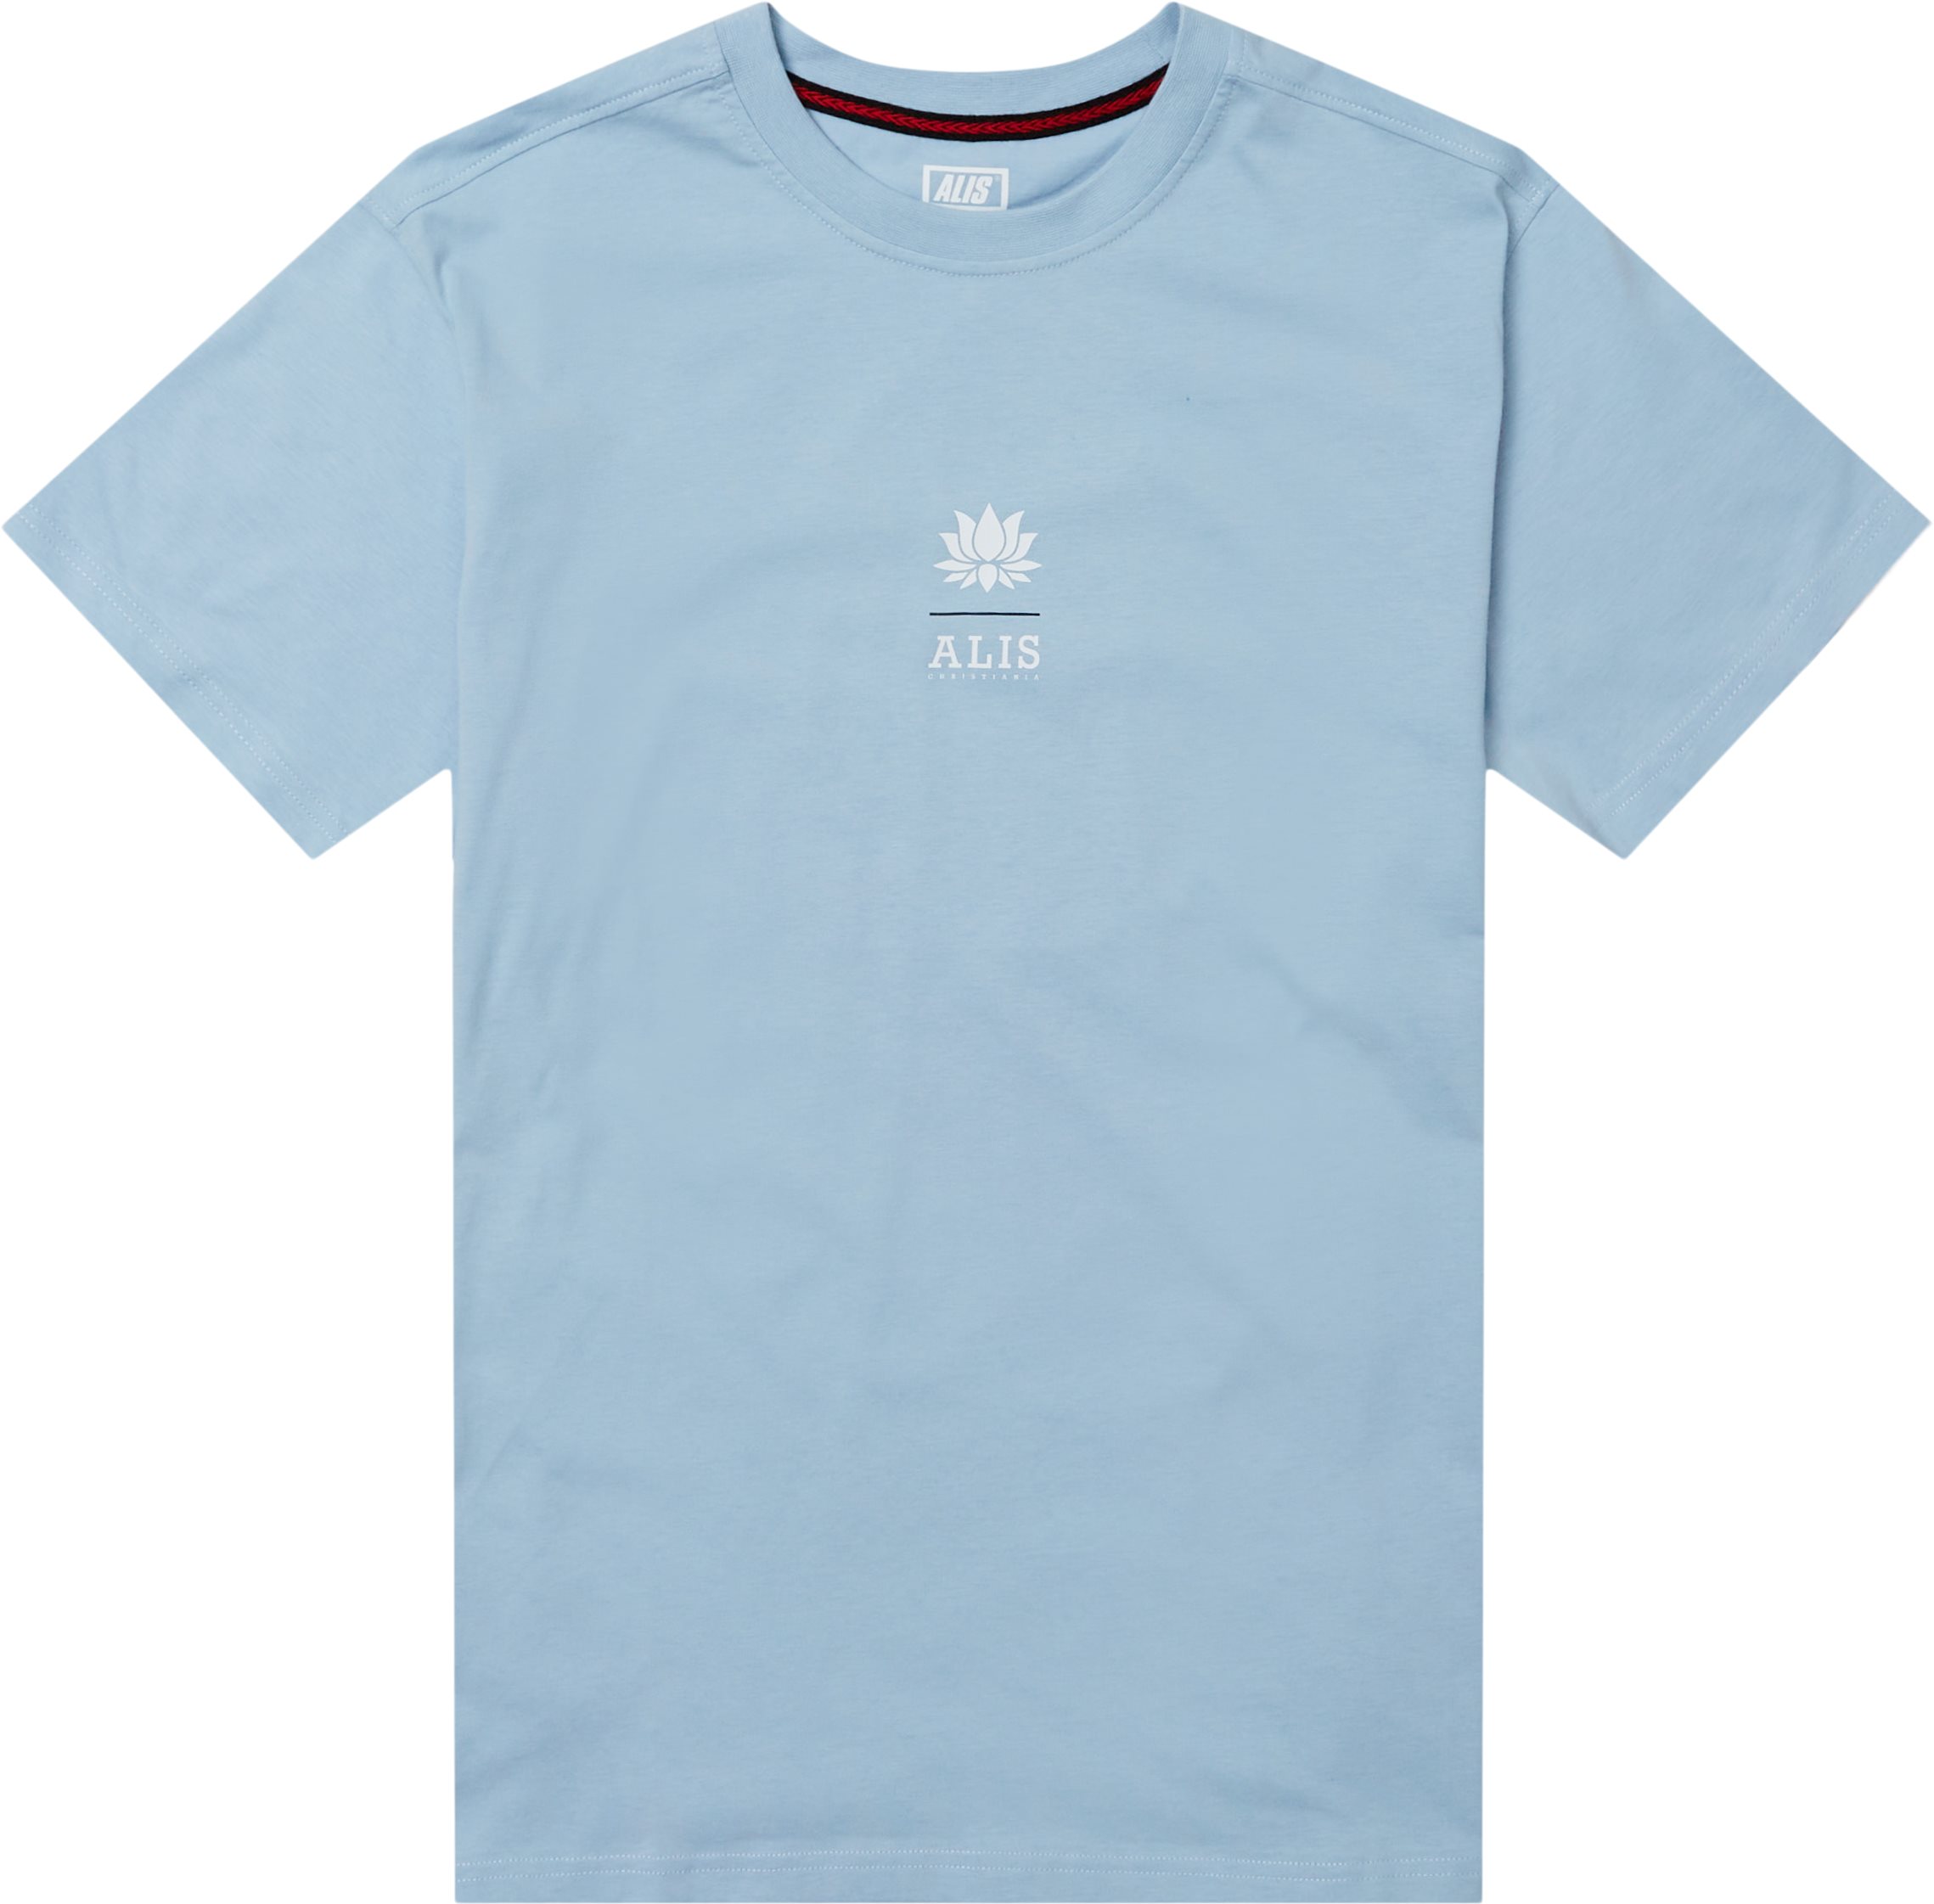 Miniature Lotus Tee - T-shirts - Regular fit - Blue